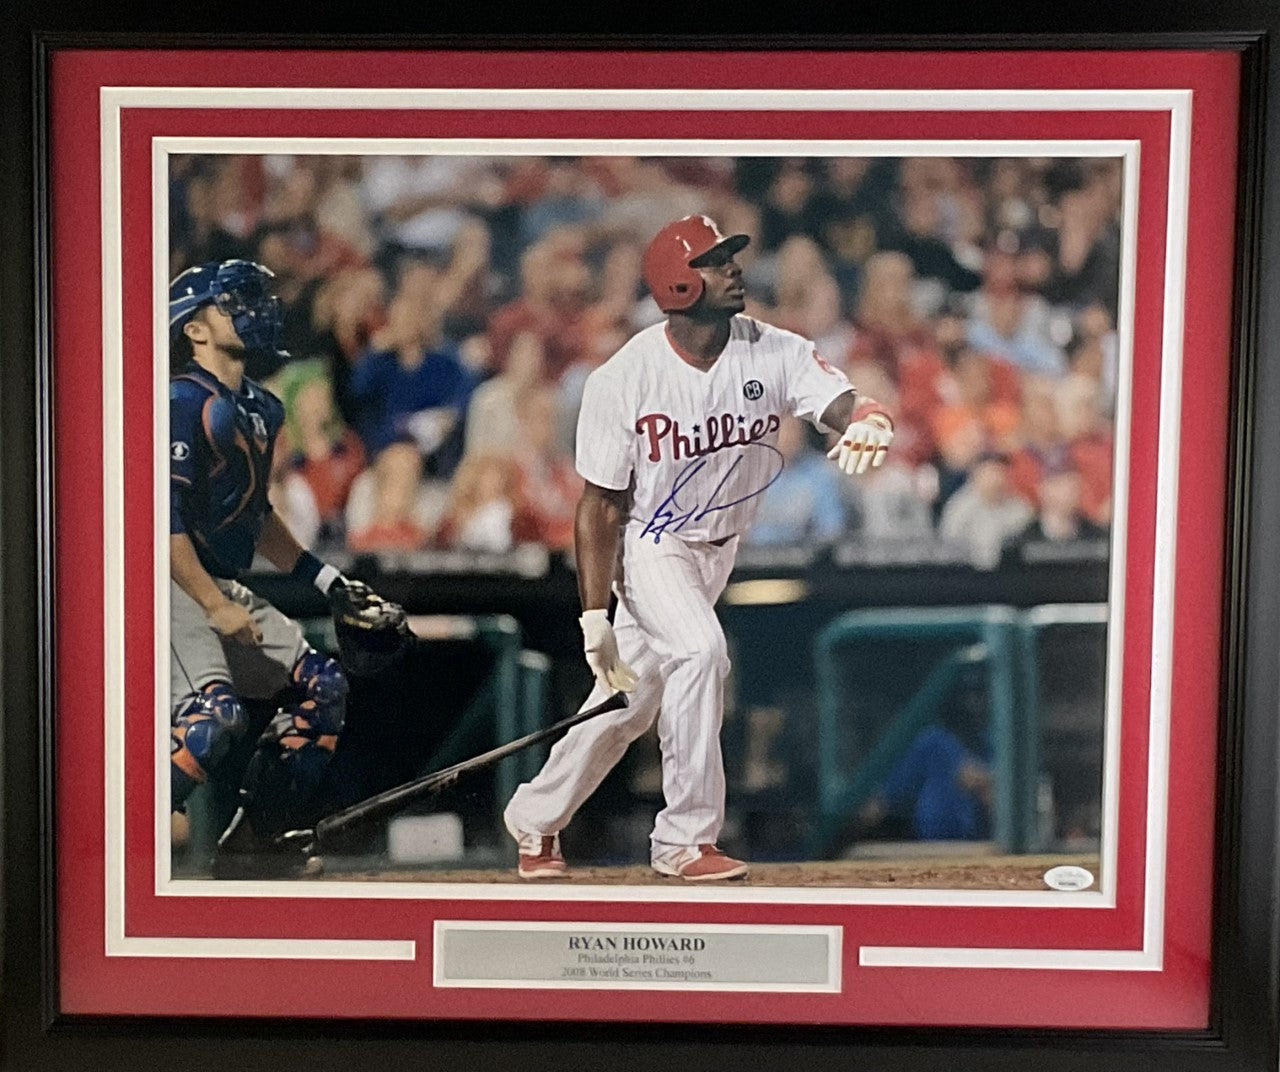 Ryan Howard Autographed 16x20 Philadelphia Phillies Photo Framed